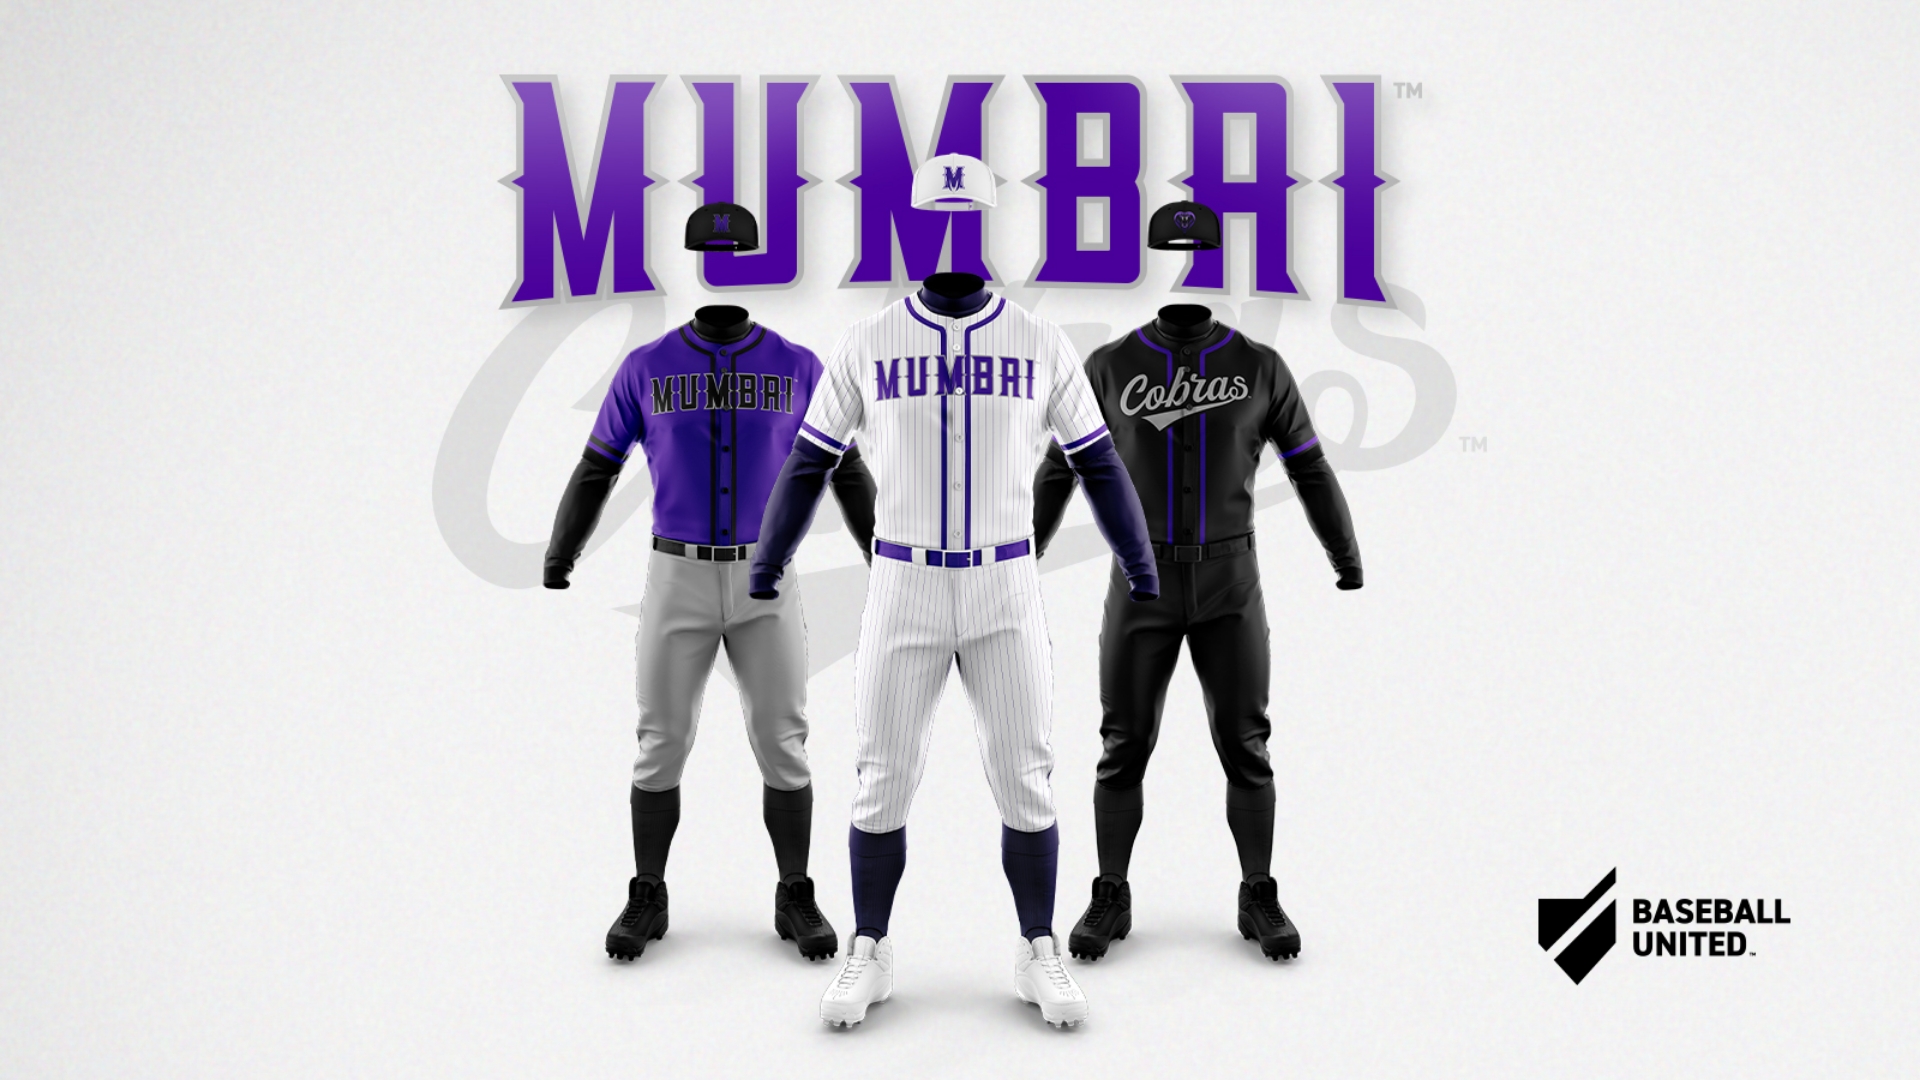 Mumbai Cobras Uniforms